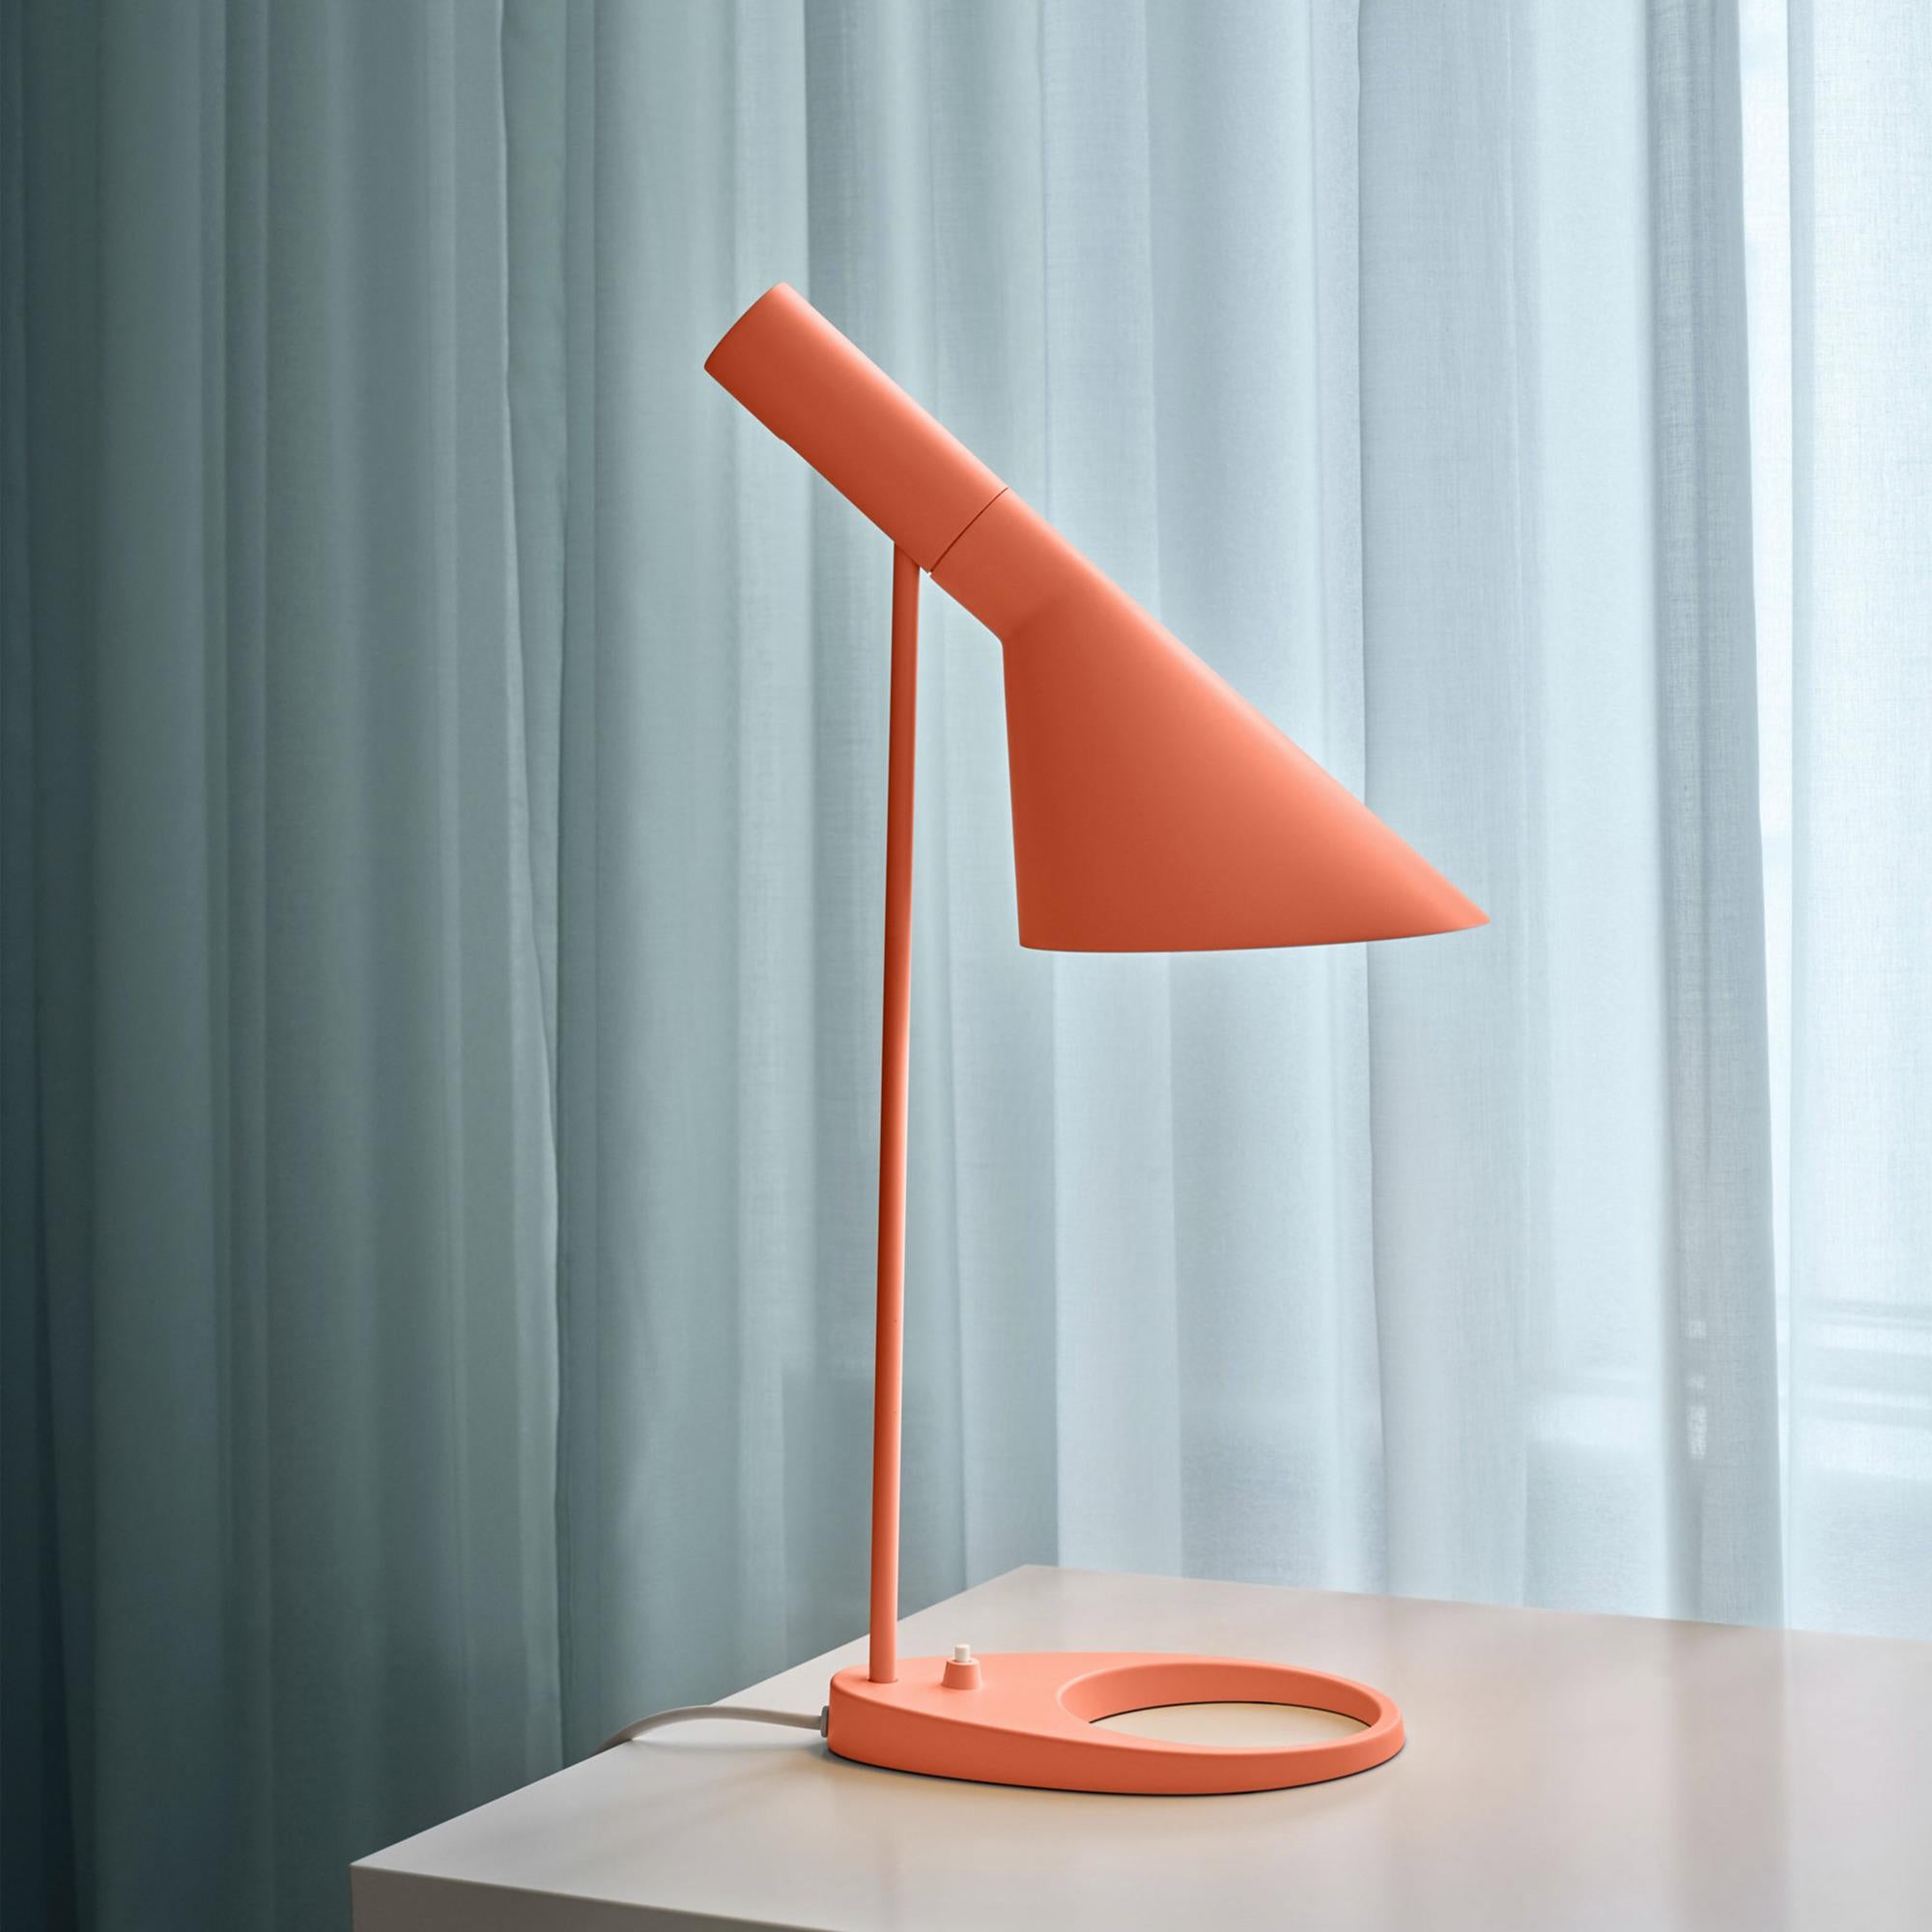 Arne Jacobsen 'AJ Mini' Table Lamp in Warm Sand for Louis Poulsen For Sale 2